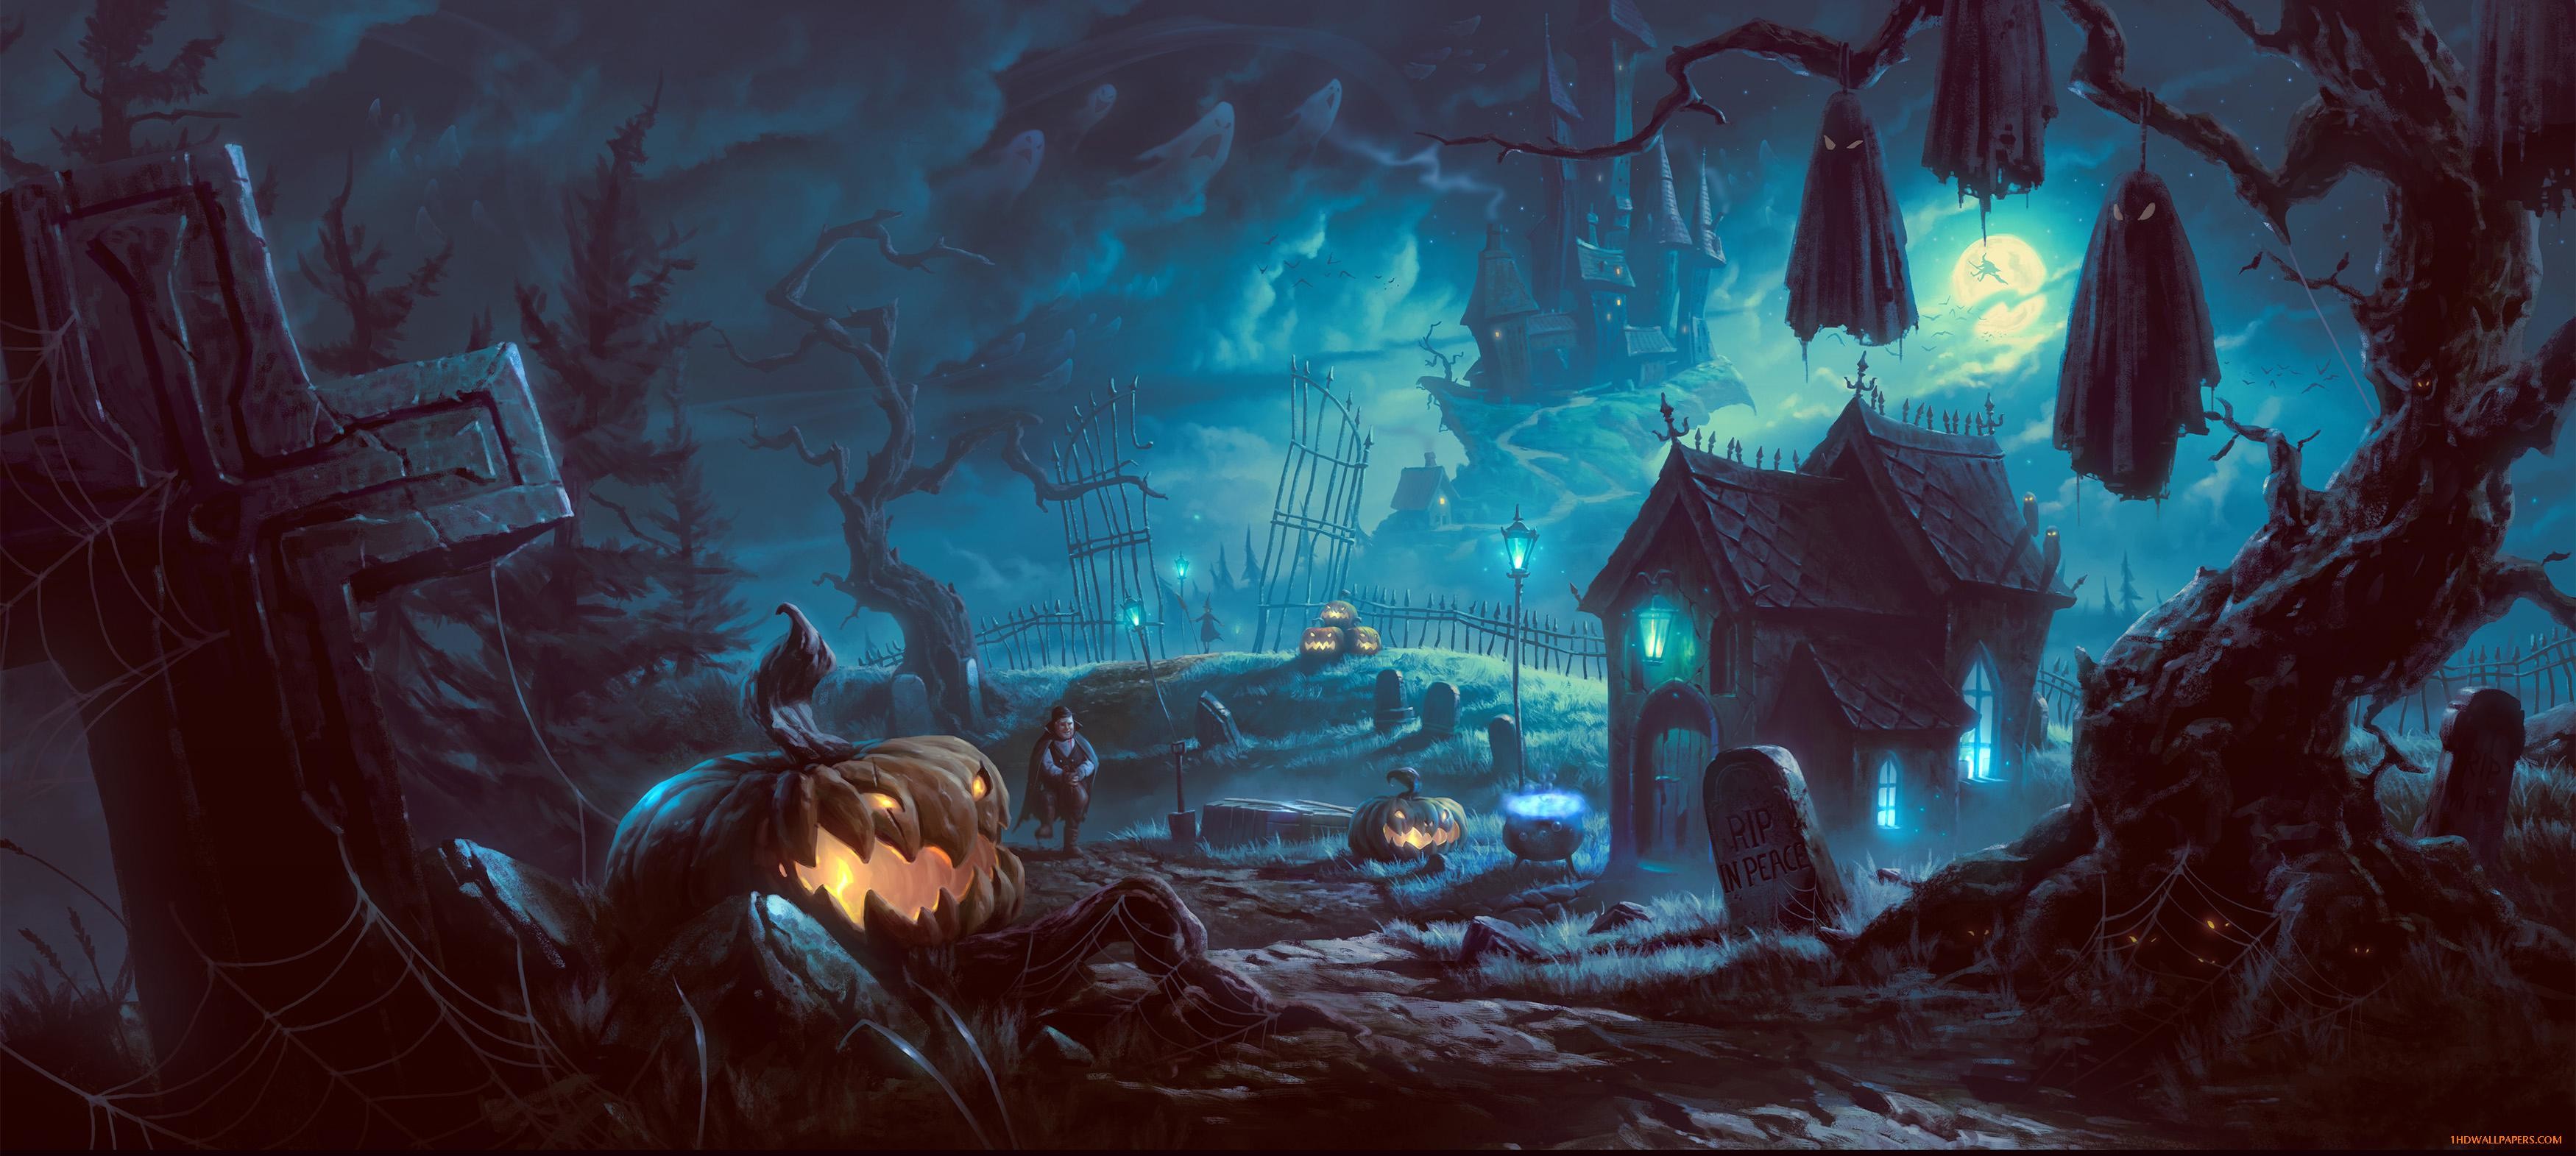 HD Halloween Wallpaper 1080p Image